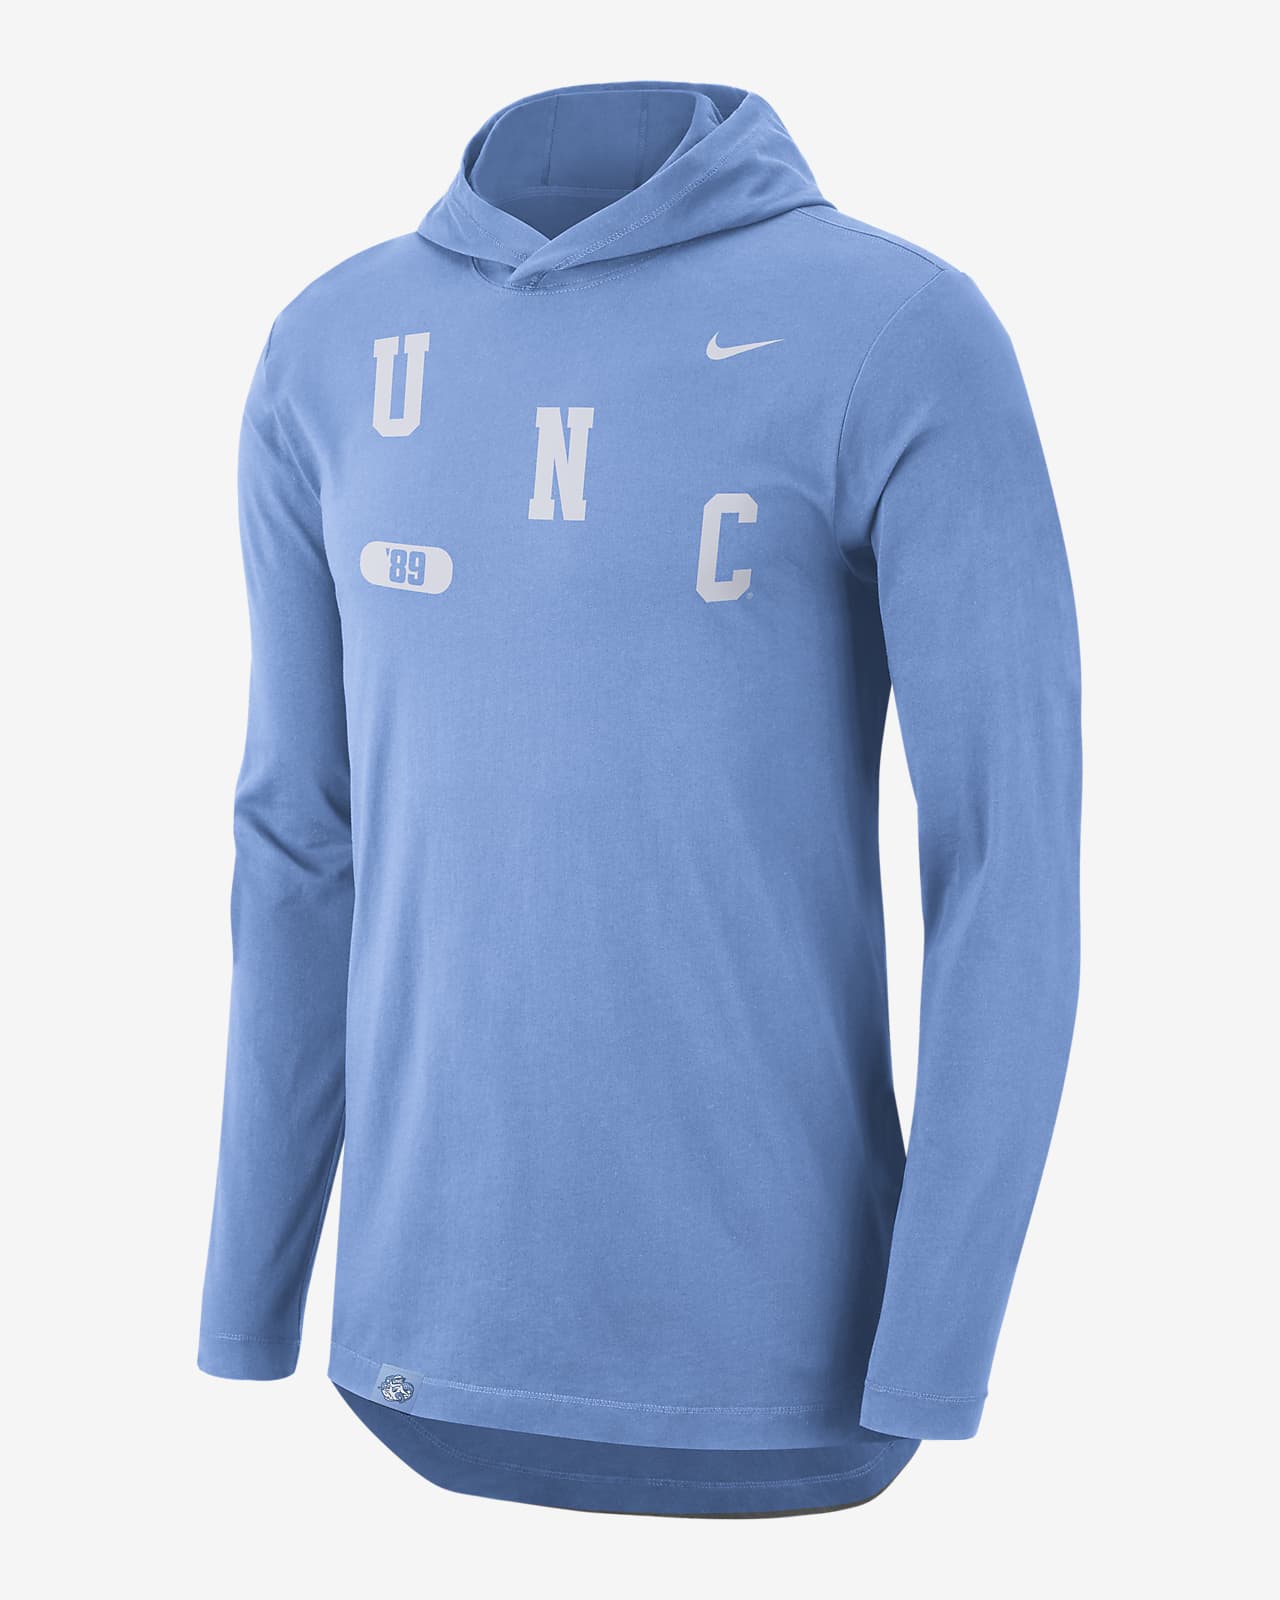 UNC Men's Nike College Hooded Long-Sleeve Nike.com